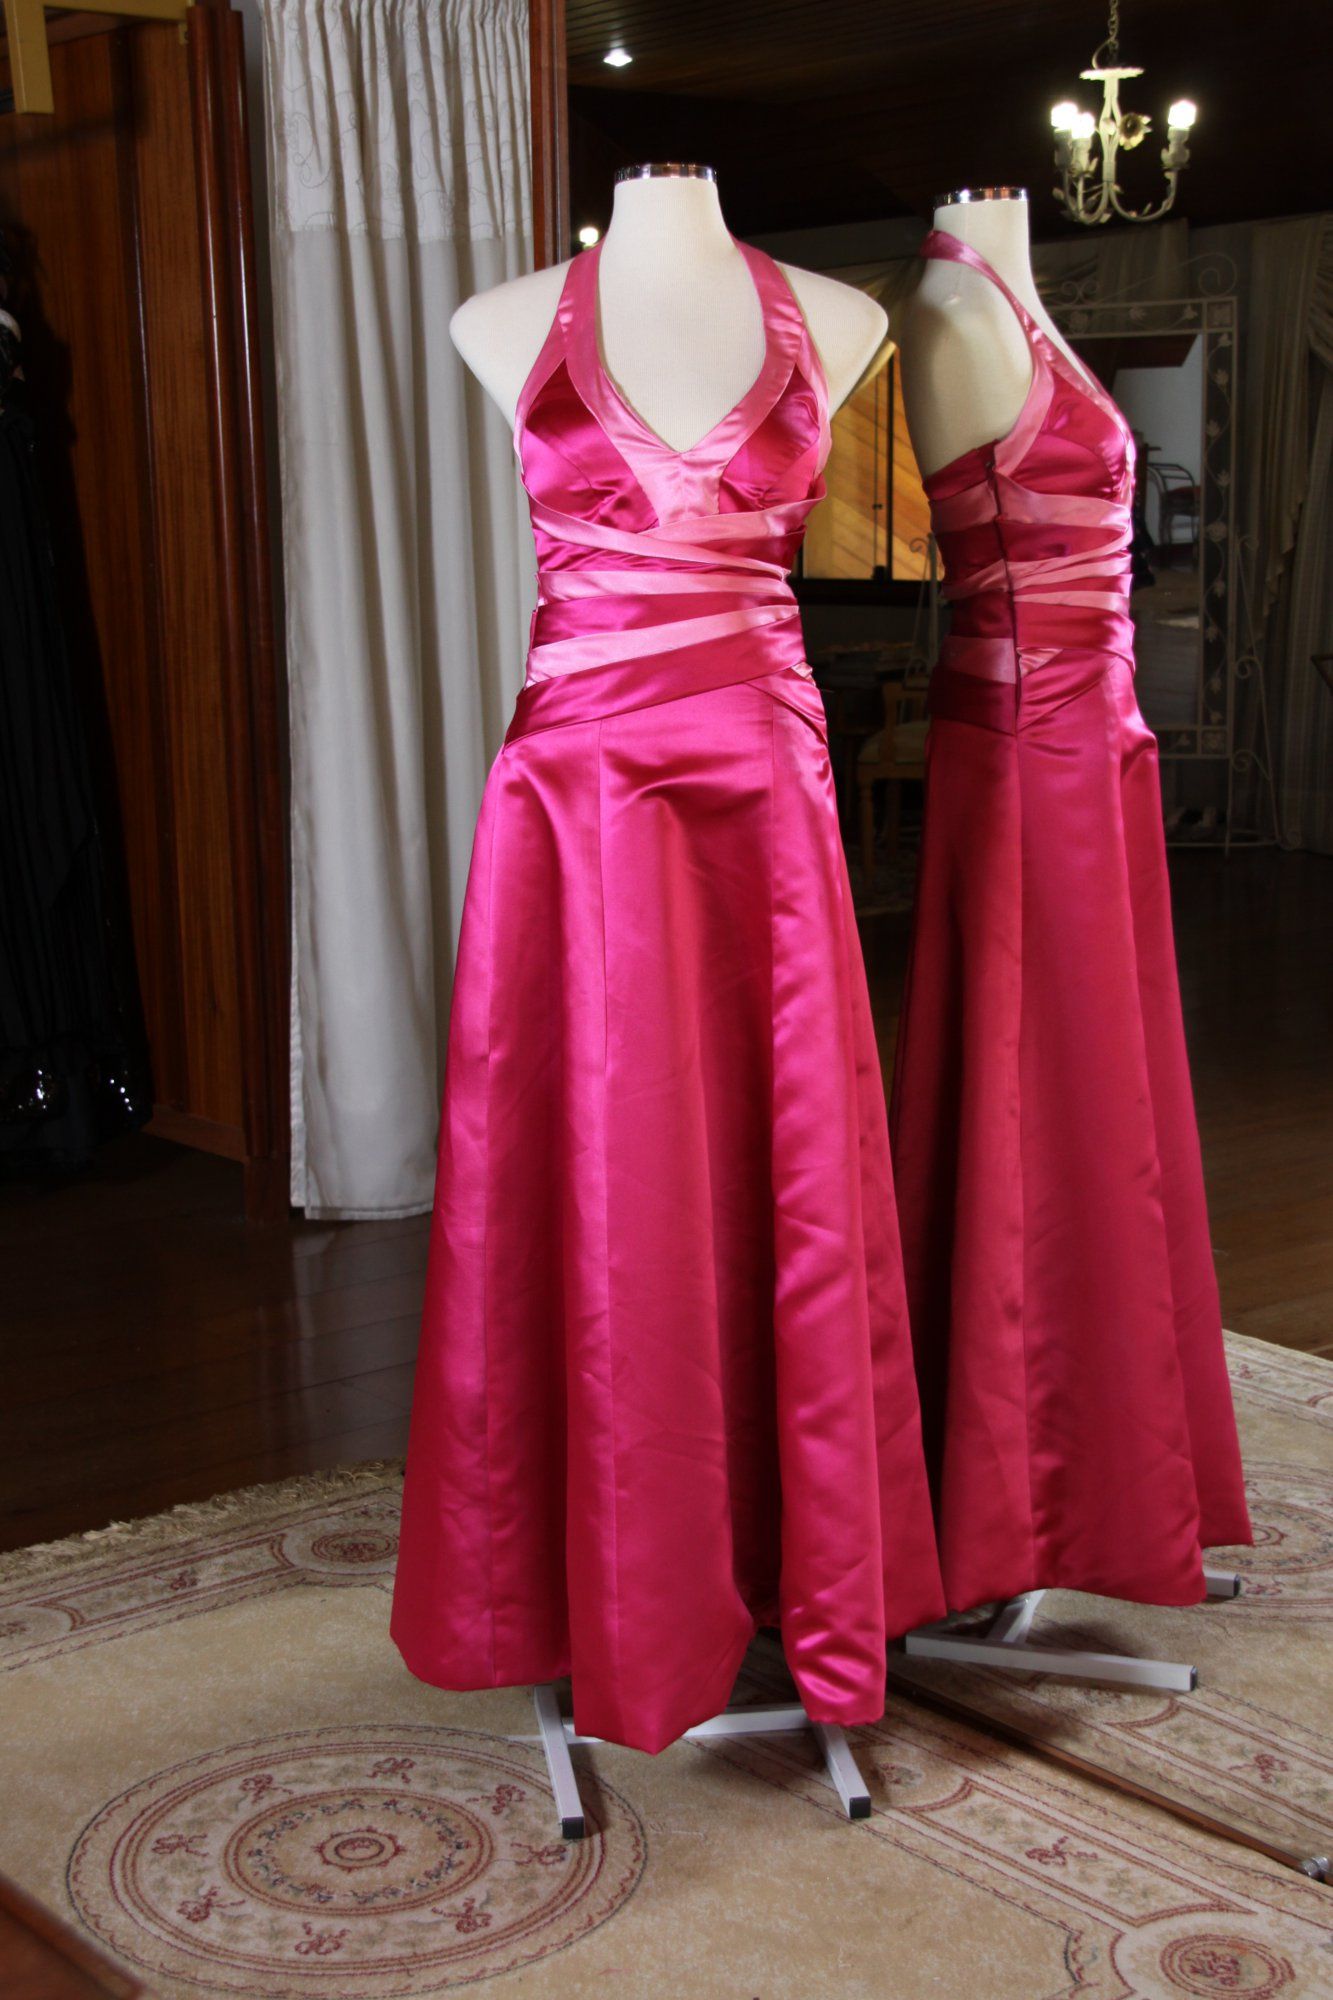 Vestido de Debutante Pink - 23 - Hipnose Alta Costura e Spa para Noivas e Noivos - Campinas - SP Vestido de Debutante, Vestido de Debutante Pink, Hipnose Alta Costura